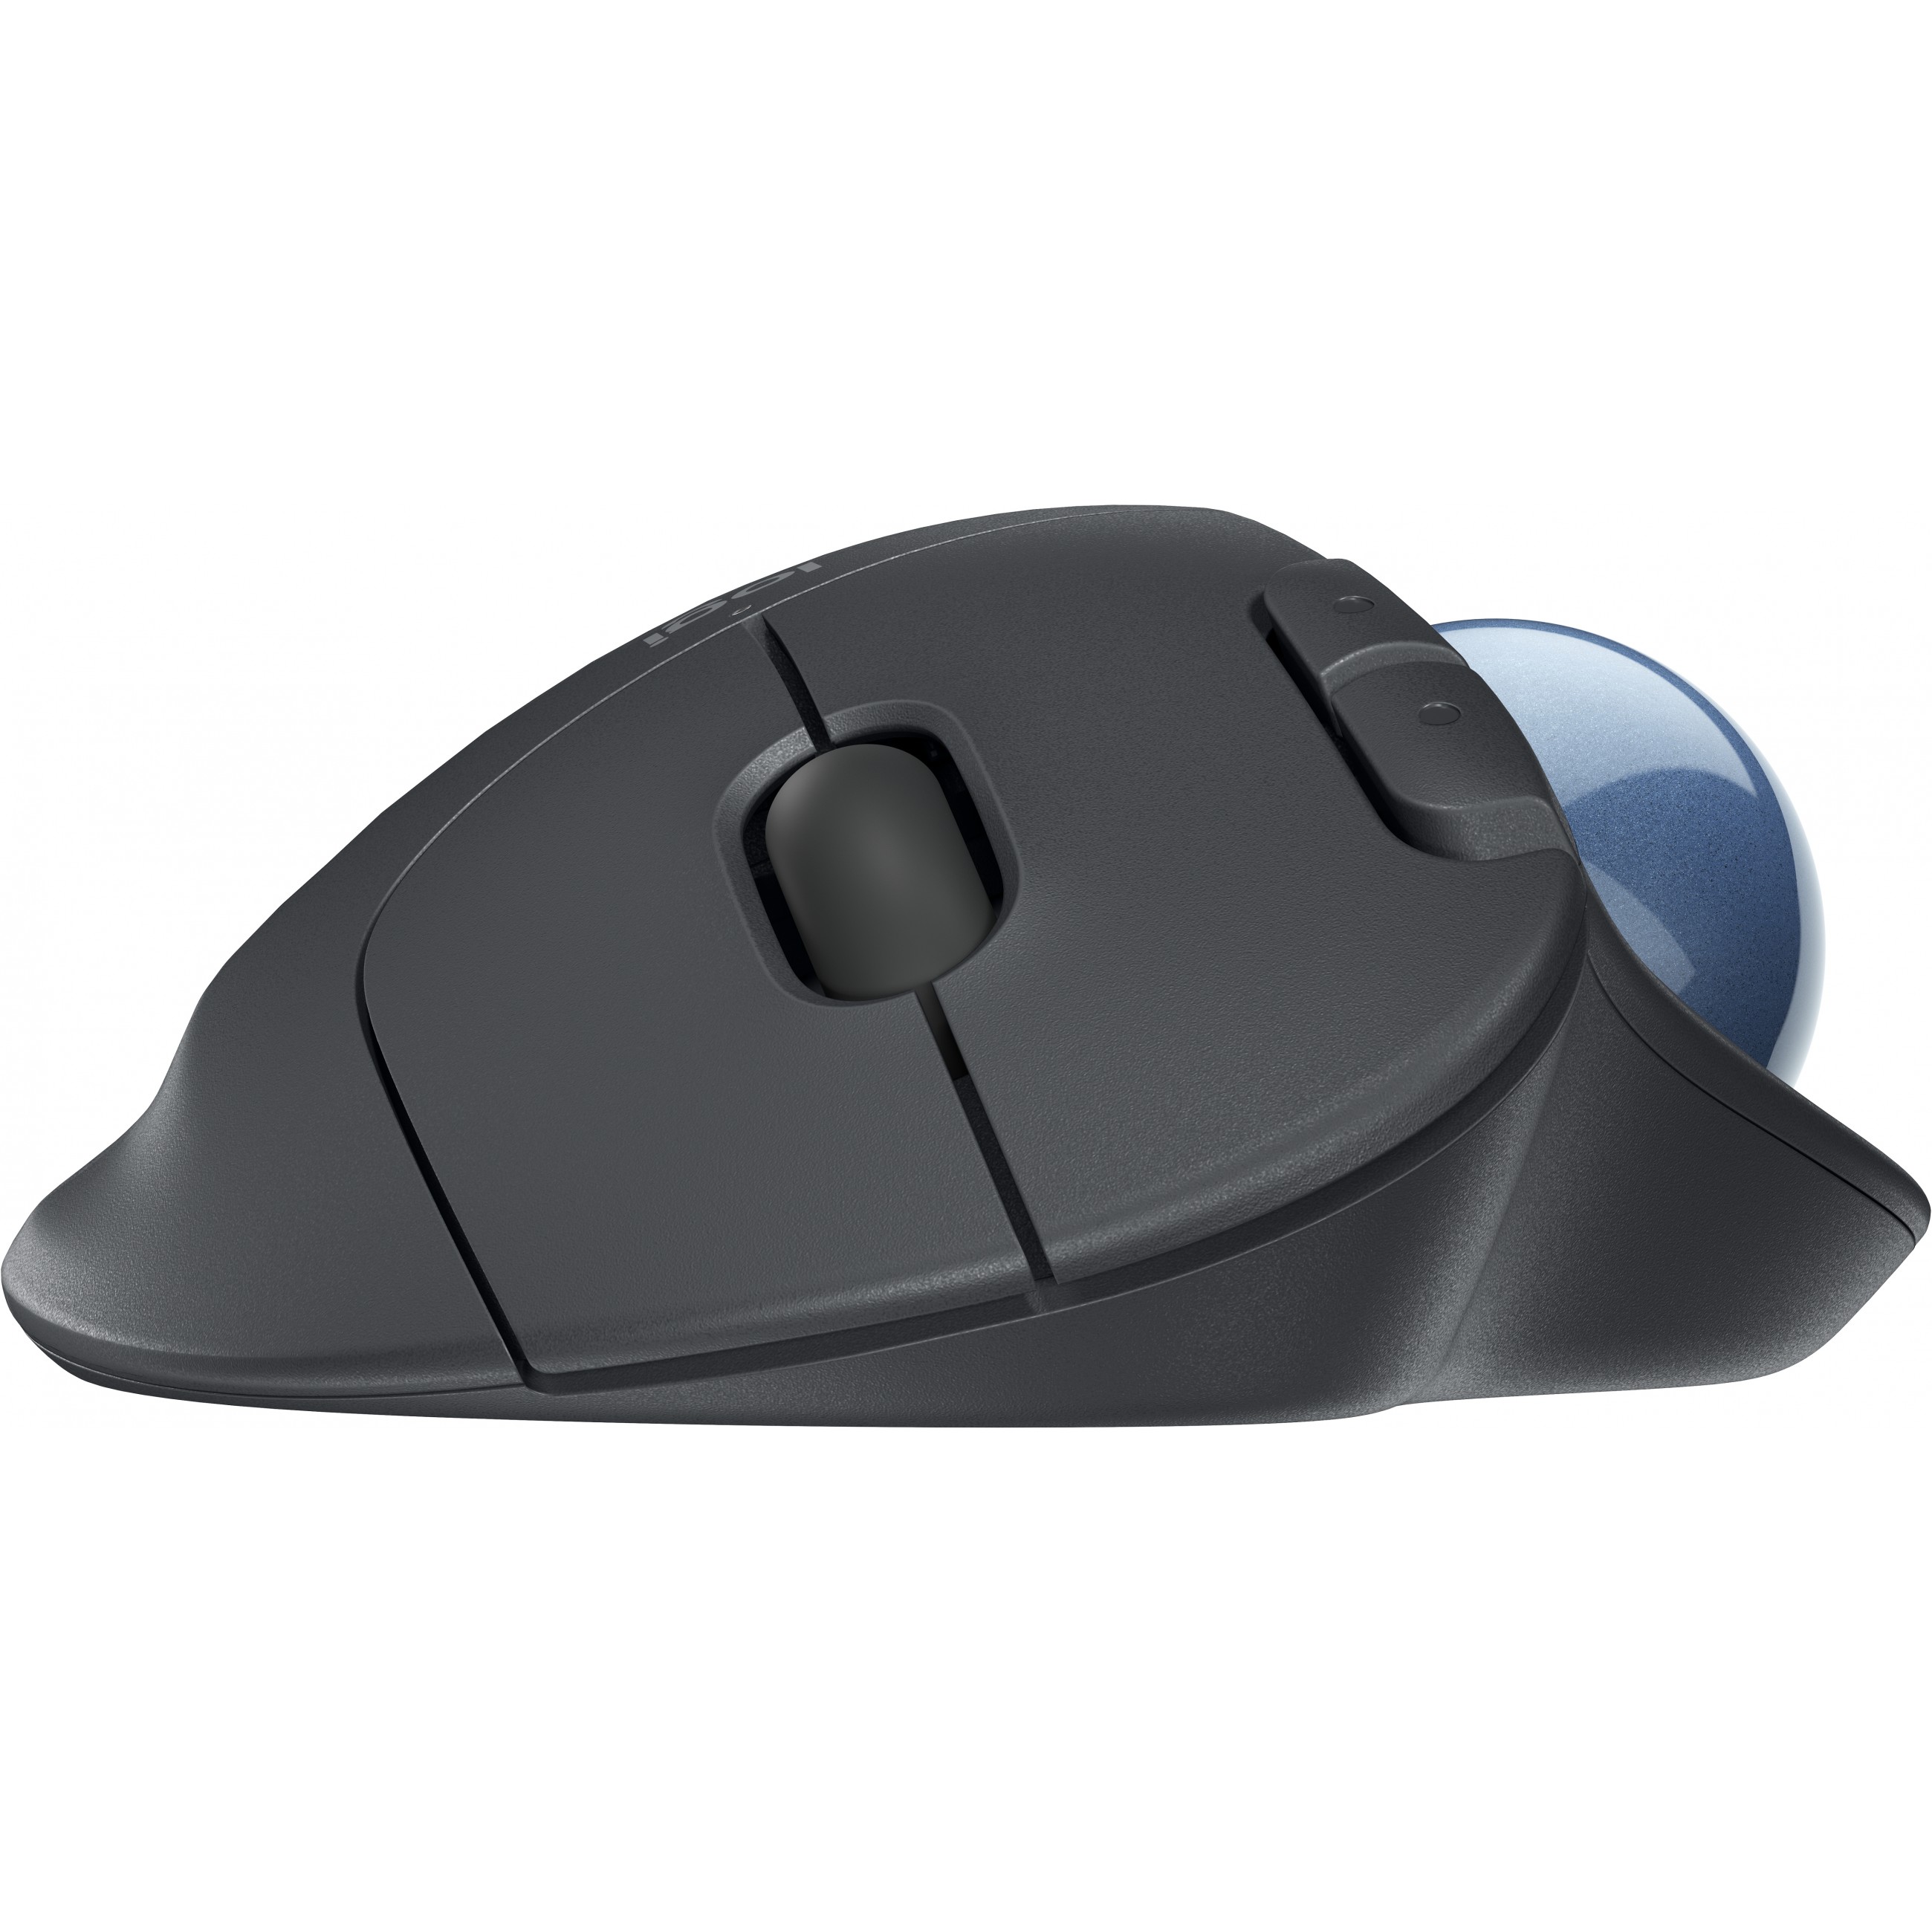 Logitech 910-006221, Mäuse & Tastaturen Mäuse, ERGO  (BILD3)